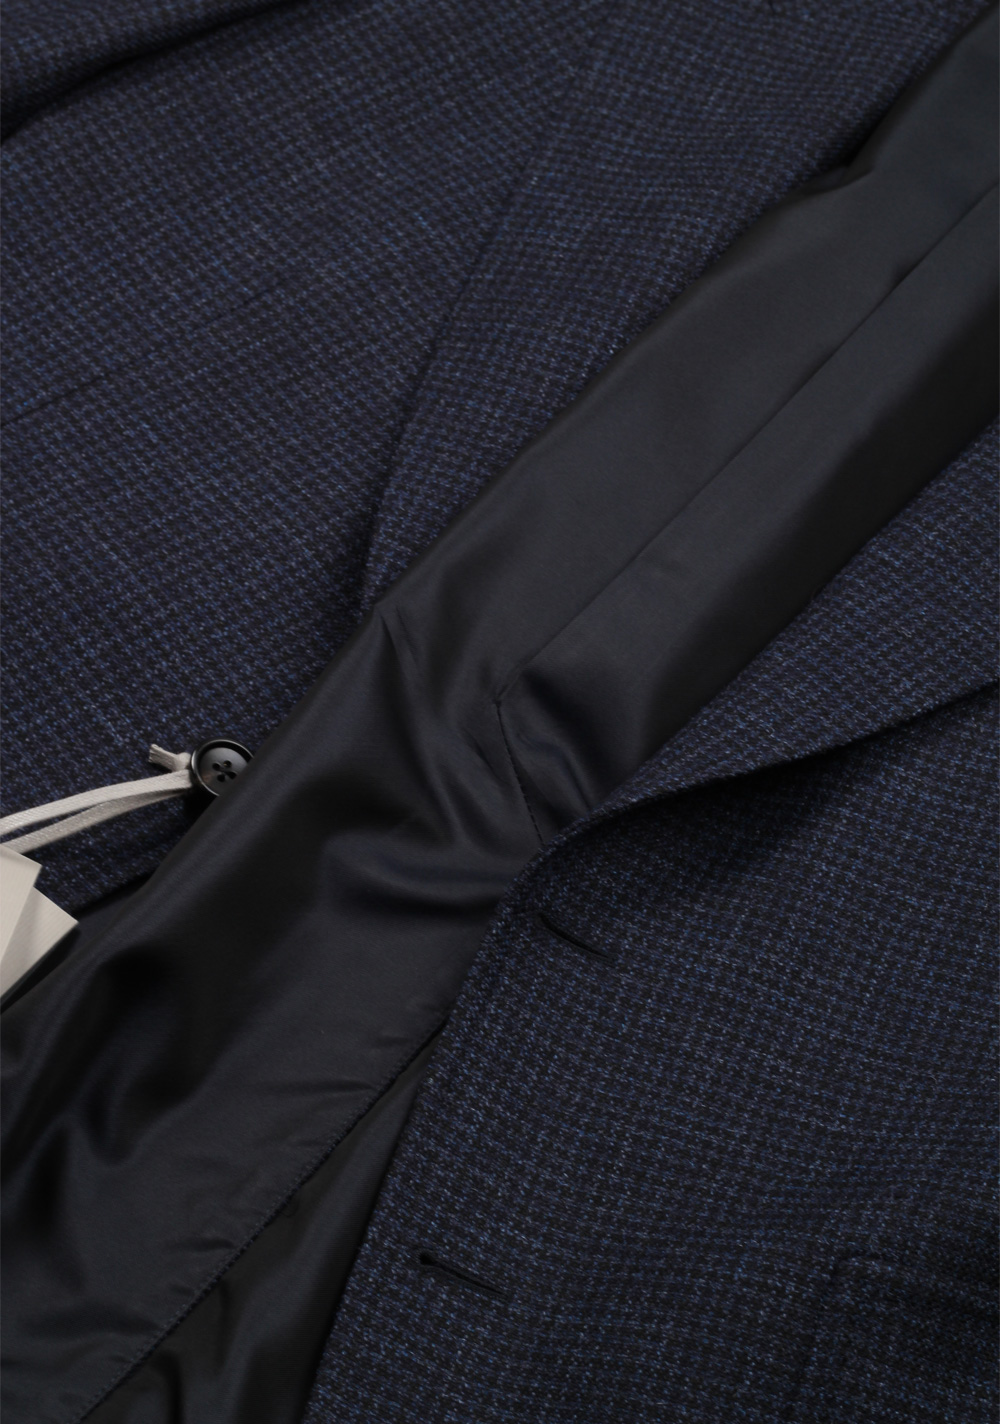 TOM FORD Shelton Blue Checked Sport Coat Size 54 / 44R Wool Alpaca Silk | Costume Limité